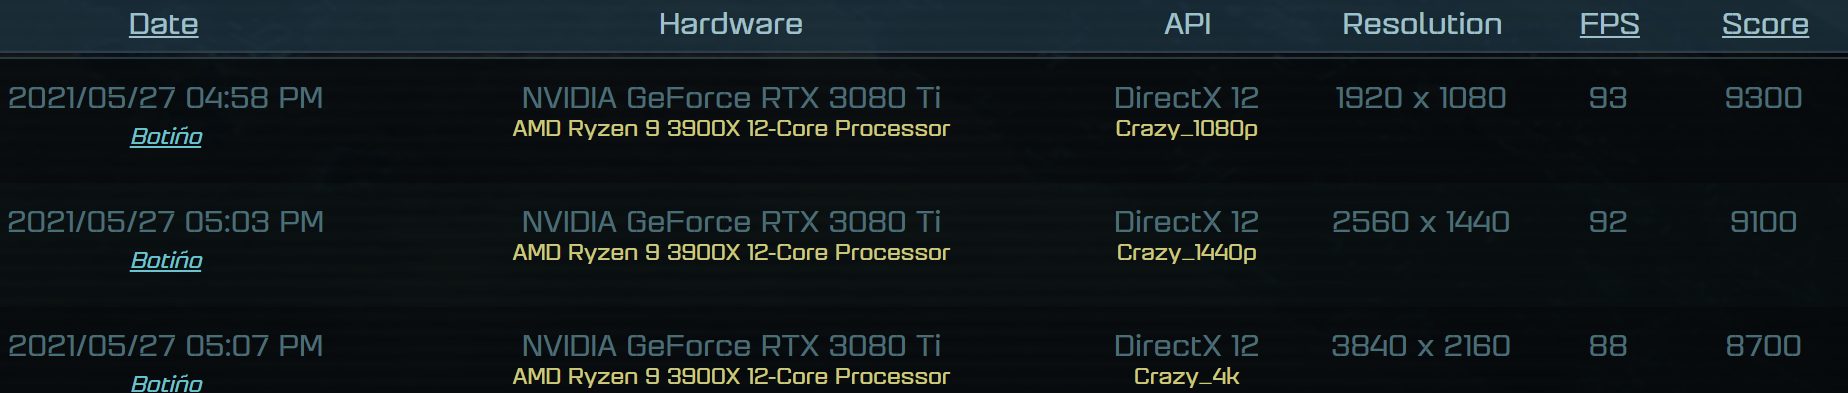 Nvidia anunciará sus RTX 3070 Ti y 3080 Ti